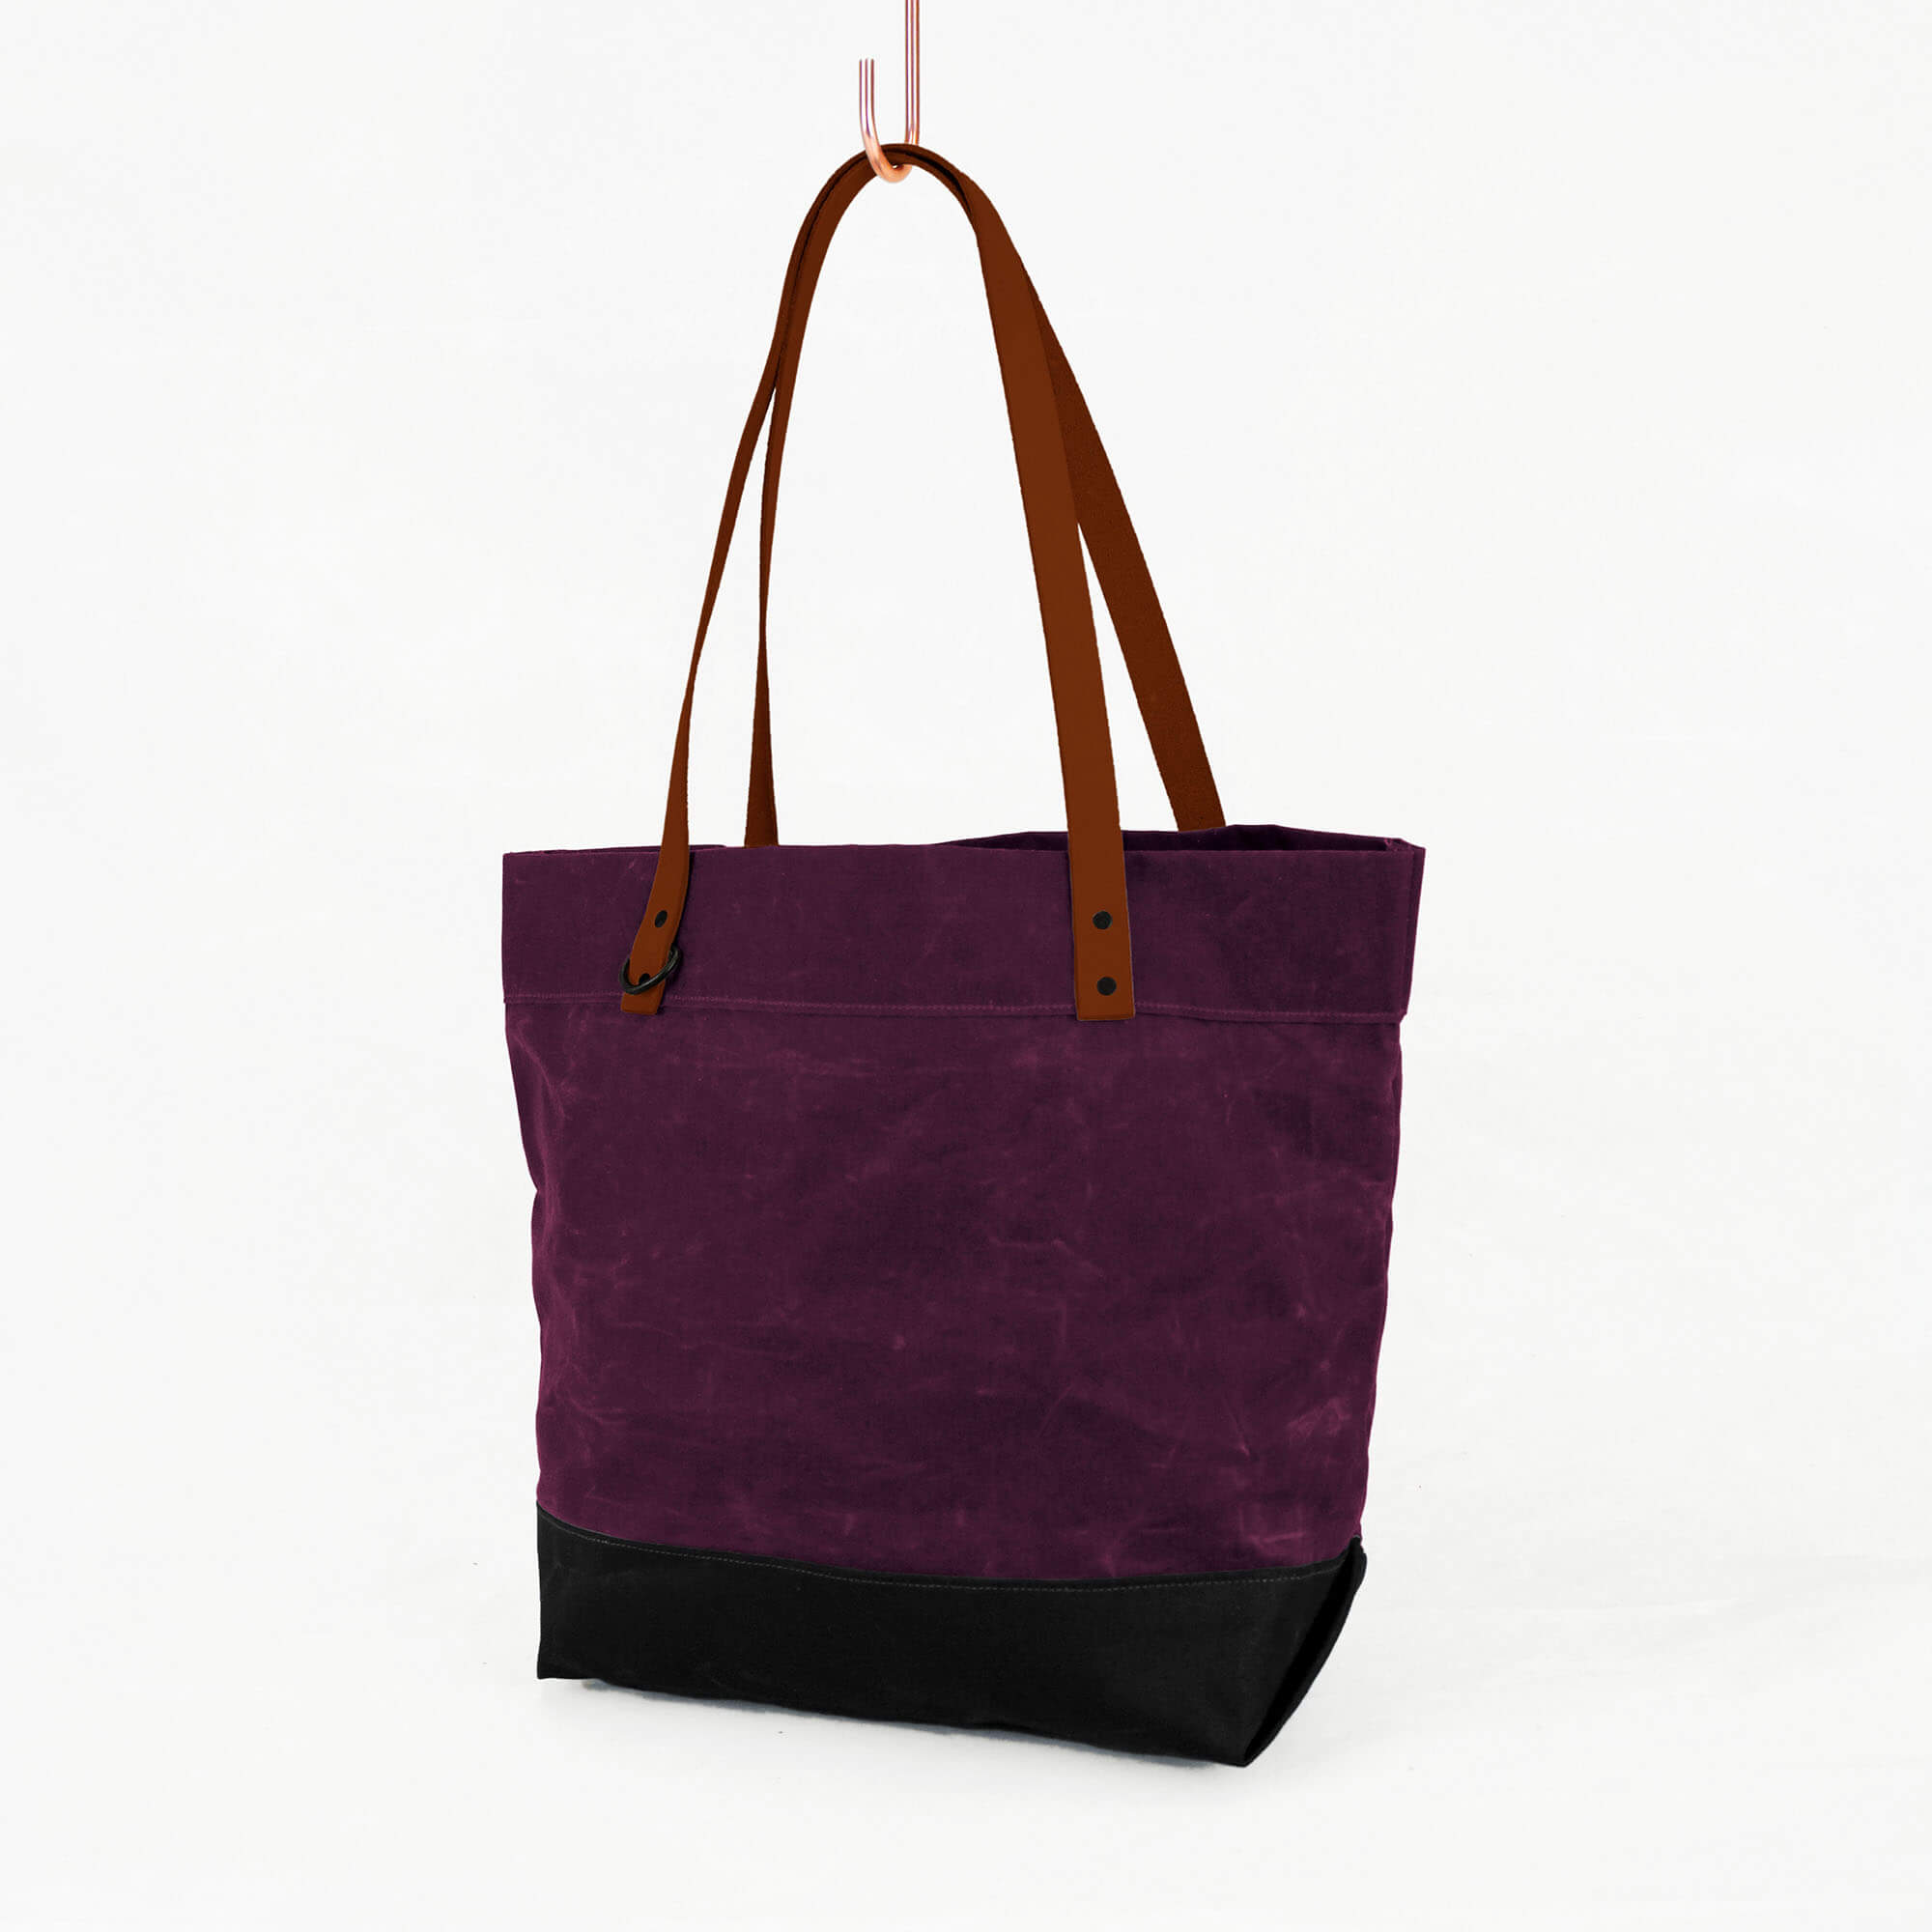 Inspired Smiley Bag DIY Kits  Genuine Leather Bag Making Kits